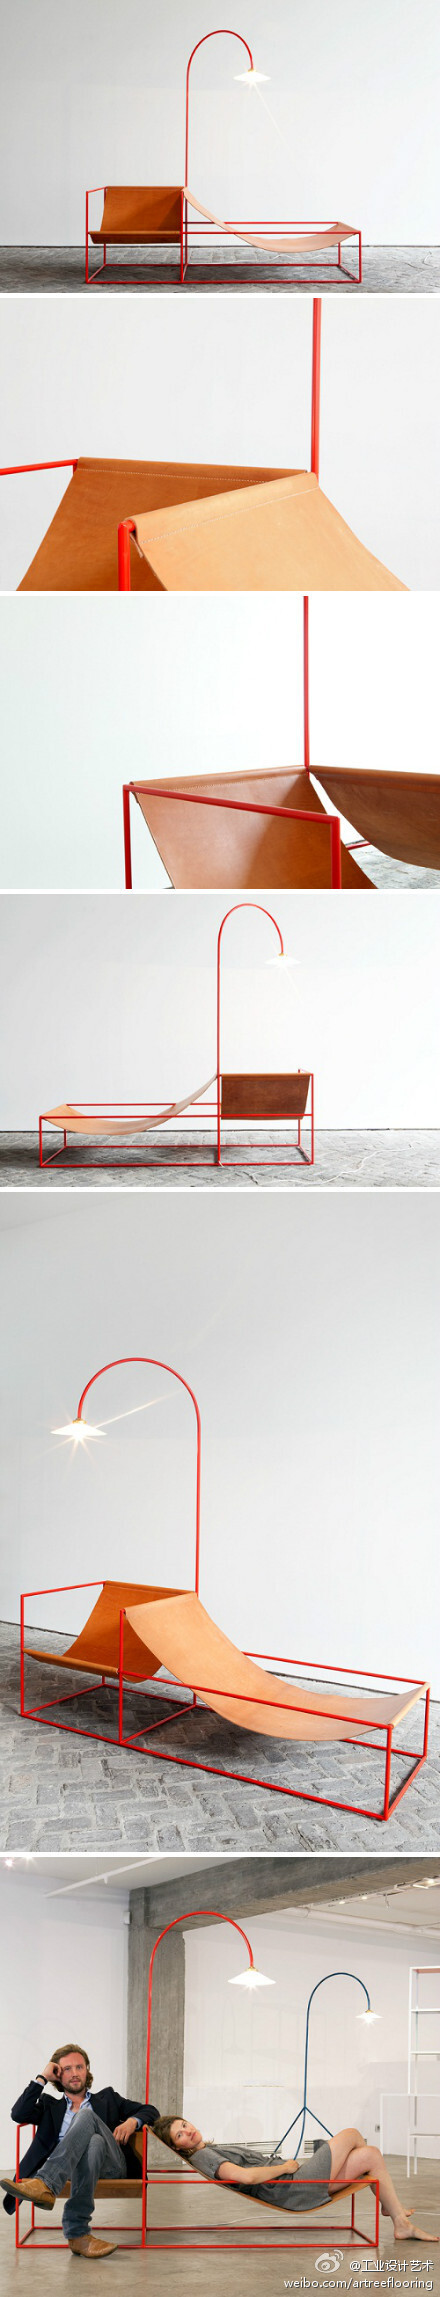 【Muller Van Severen：家具设计】比利时摄影师Fien Muller和艺术家Hannes Van Severen联手创作了系列家具作品，这件叫做“Zetel”的作品集了躺椅、扶手椅和落地灯三者功能于一身。简单线条勾勒出鲜明的轮廓，完美诠释了功能至上的包豪斯设计理念。